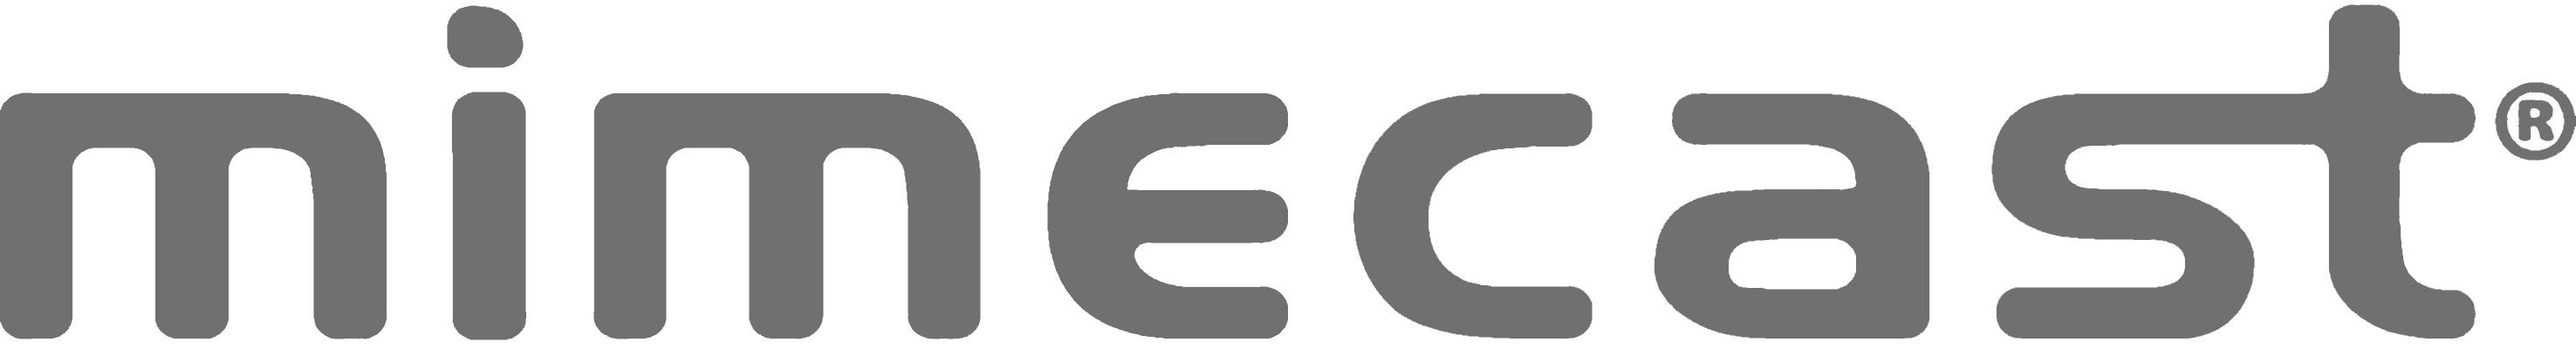 grey mimecast logo